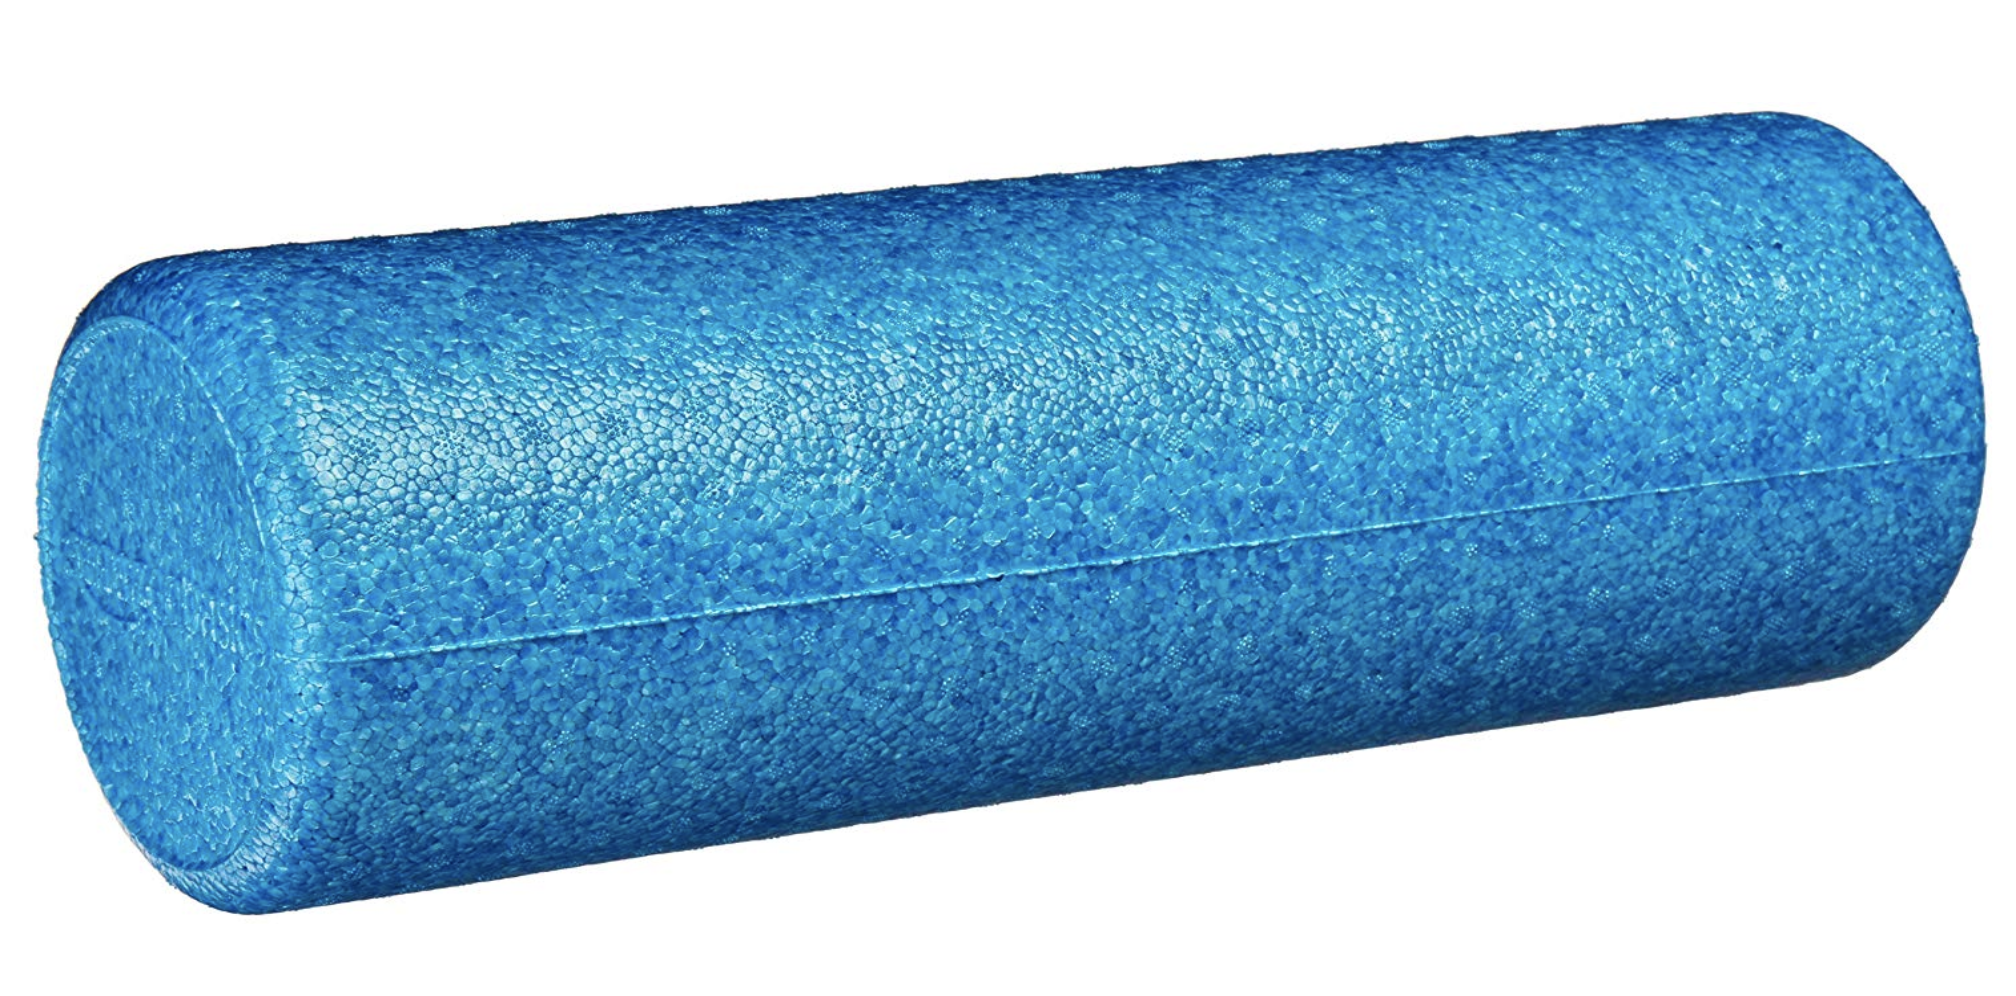 A foam roller can help alleviate muscle soreness (Amazon)